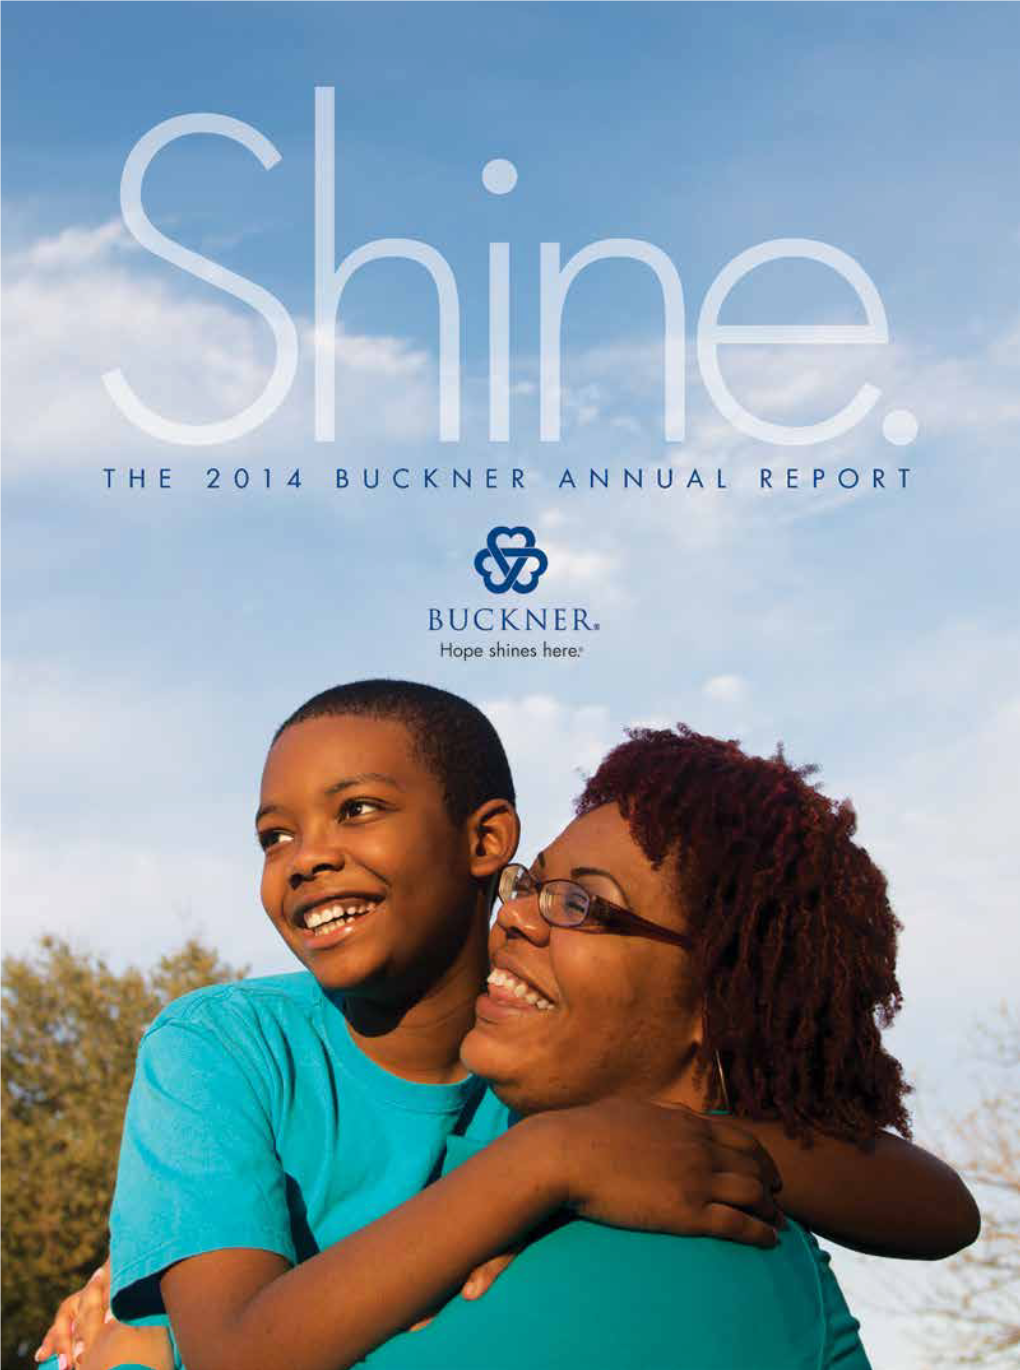 2014 Annual Report